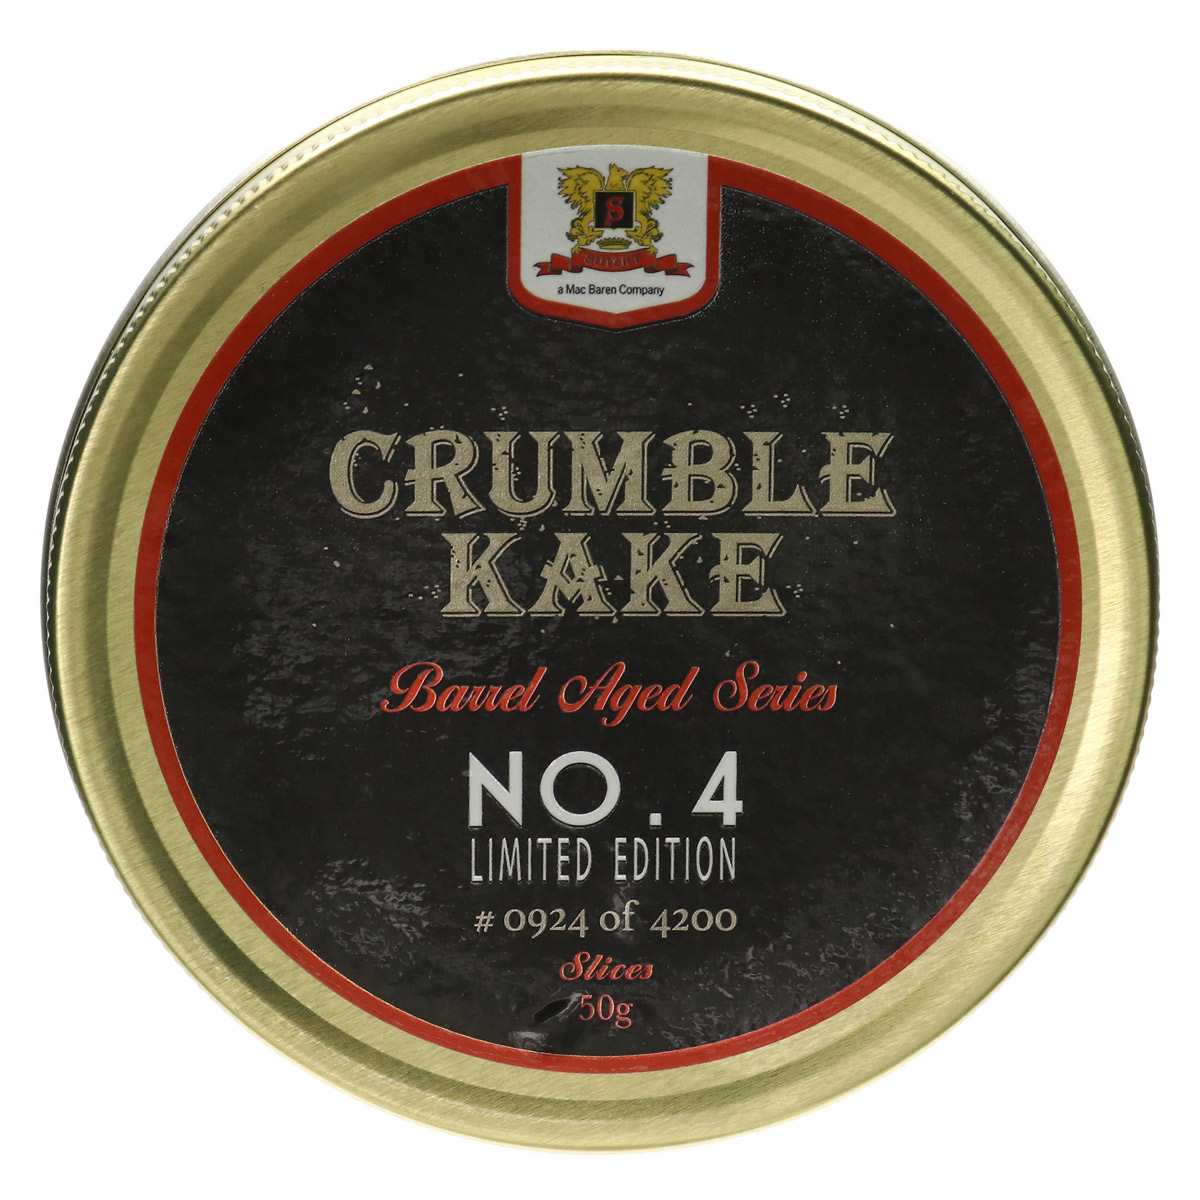 Sutliff Crumble Kake Barrel Aged Series No.4 Limited Edition 50g